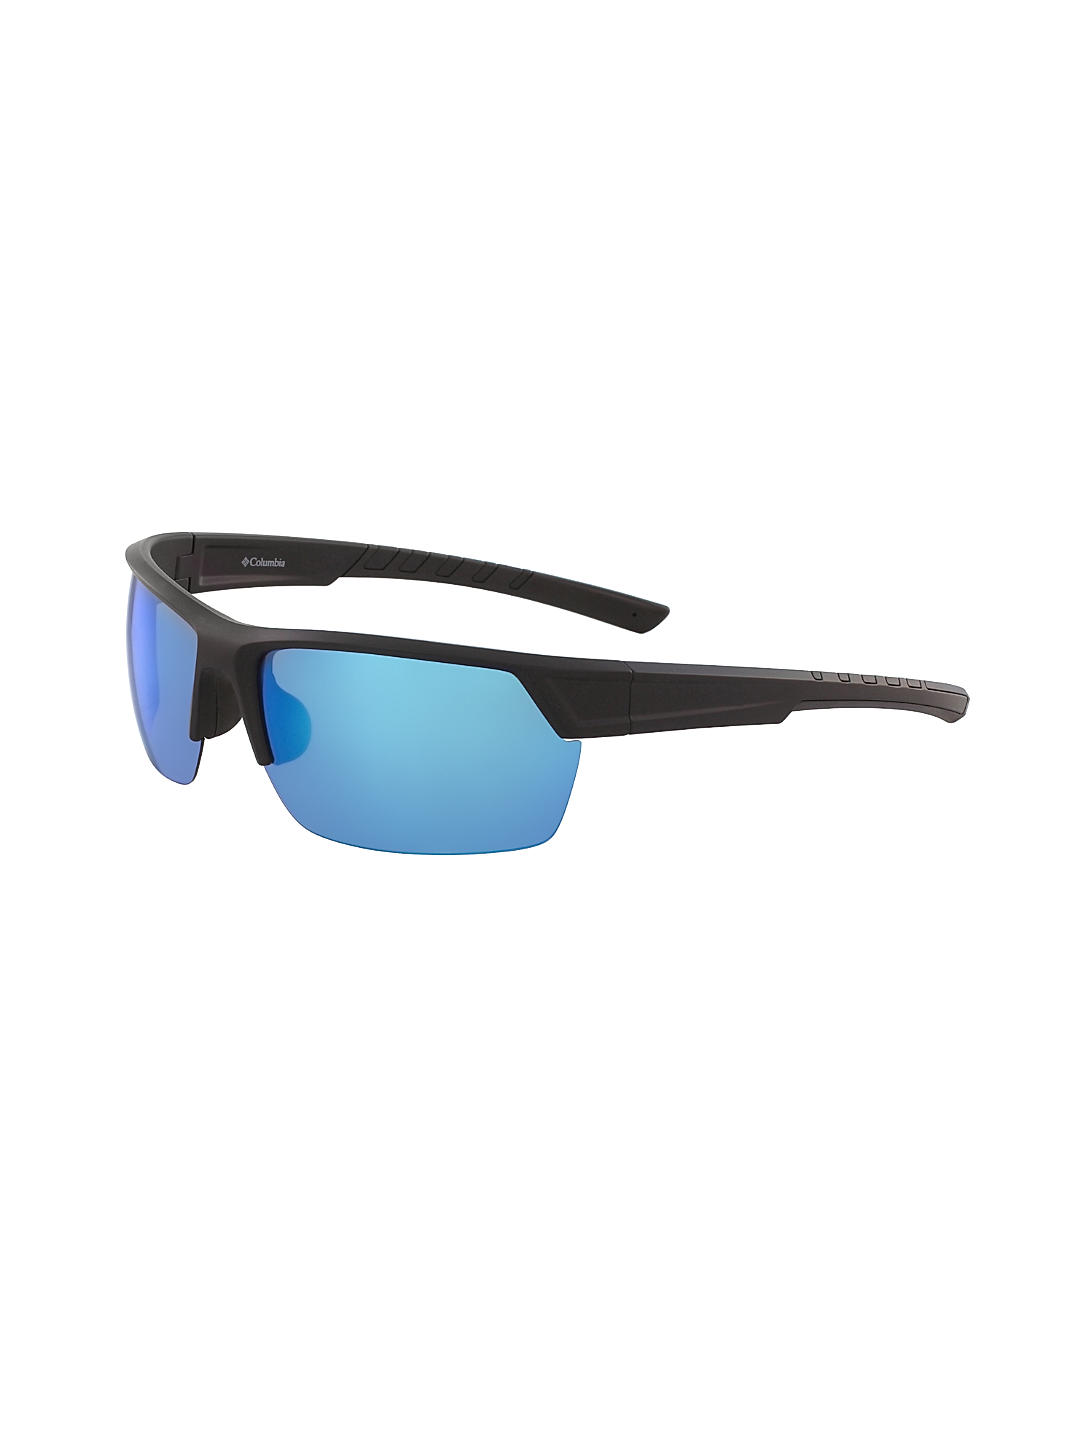 Buy Black Peak Racer Sunglasses for Men Online at Columbia